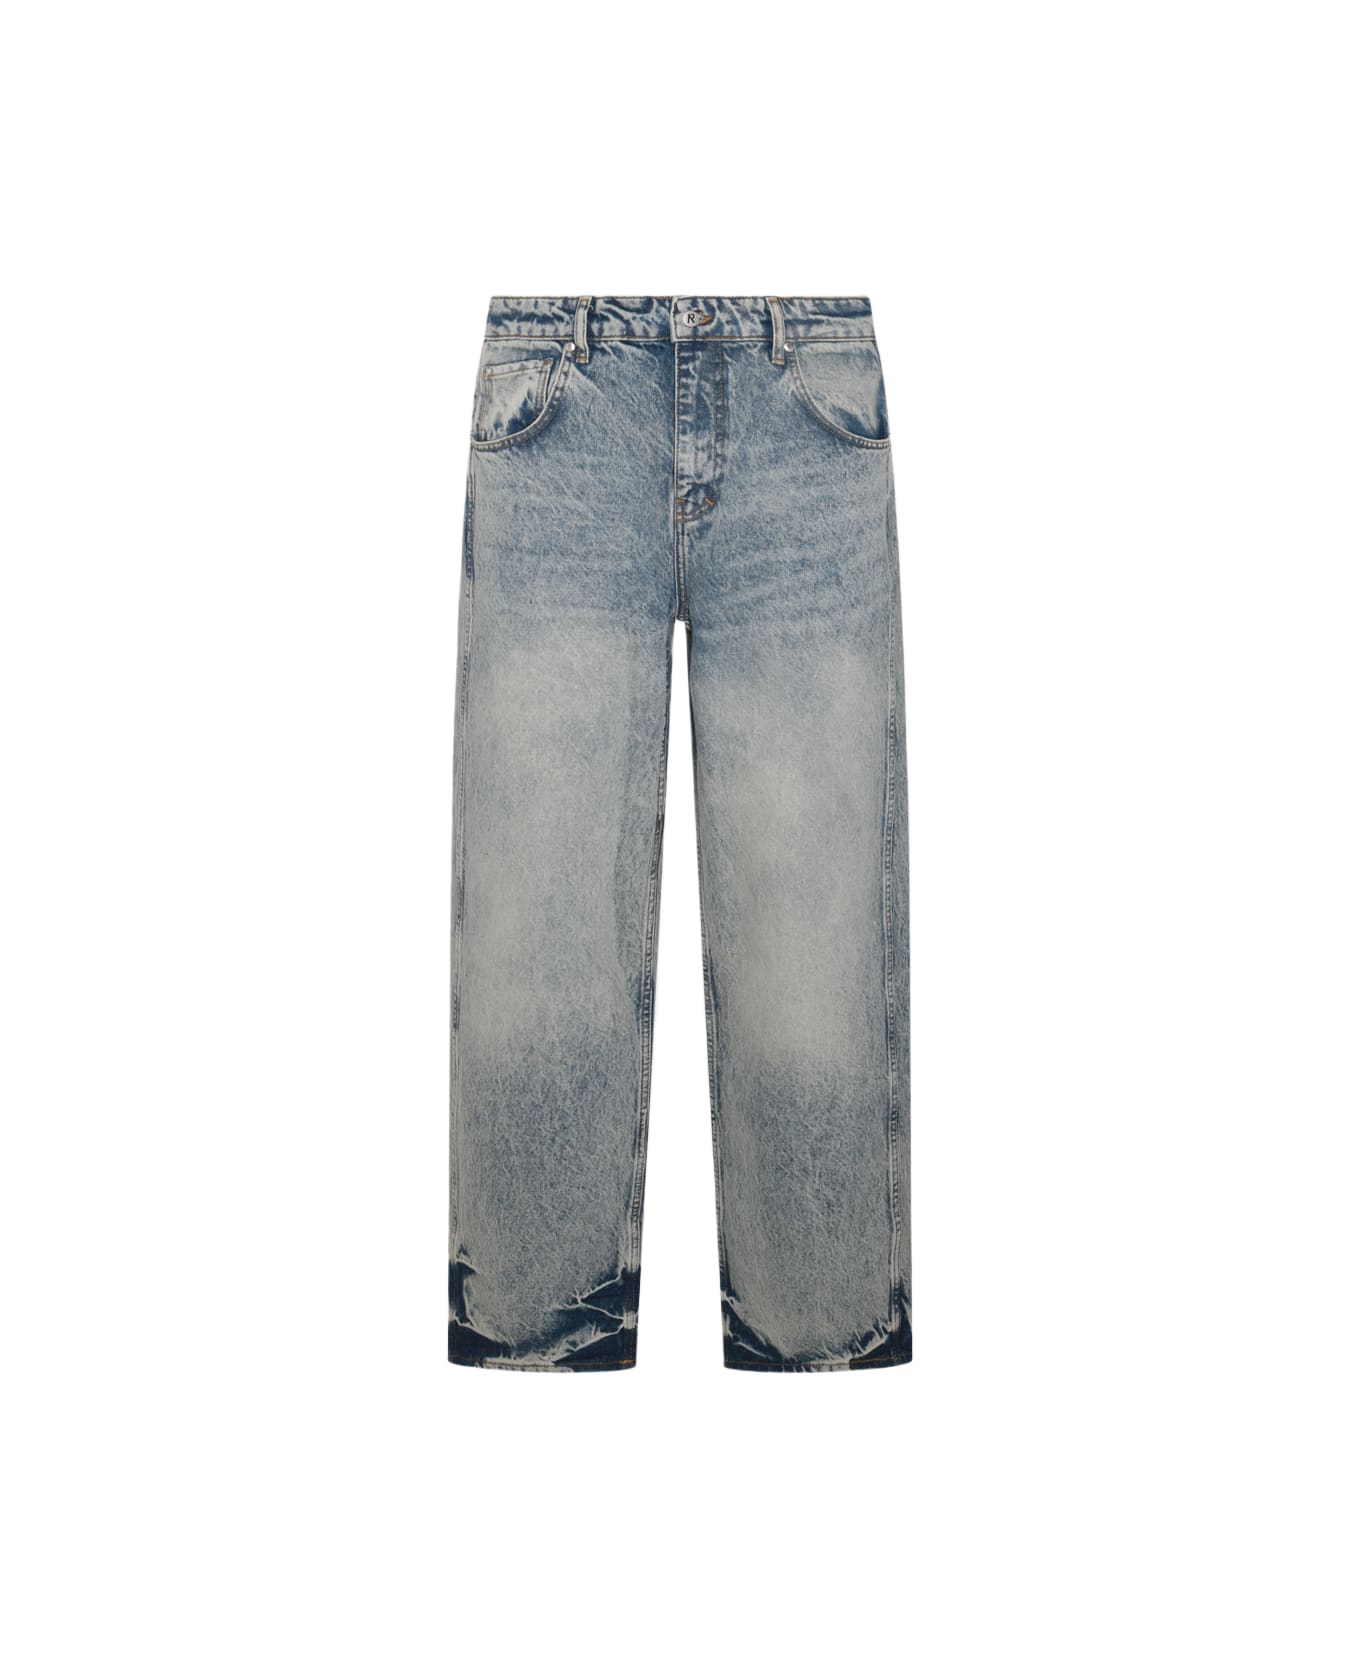 REPRESENT Blue Cotton Denim Jeans - Blue デニム